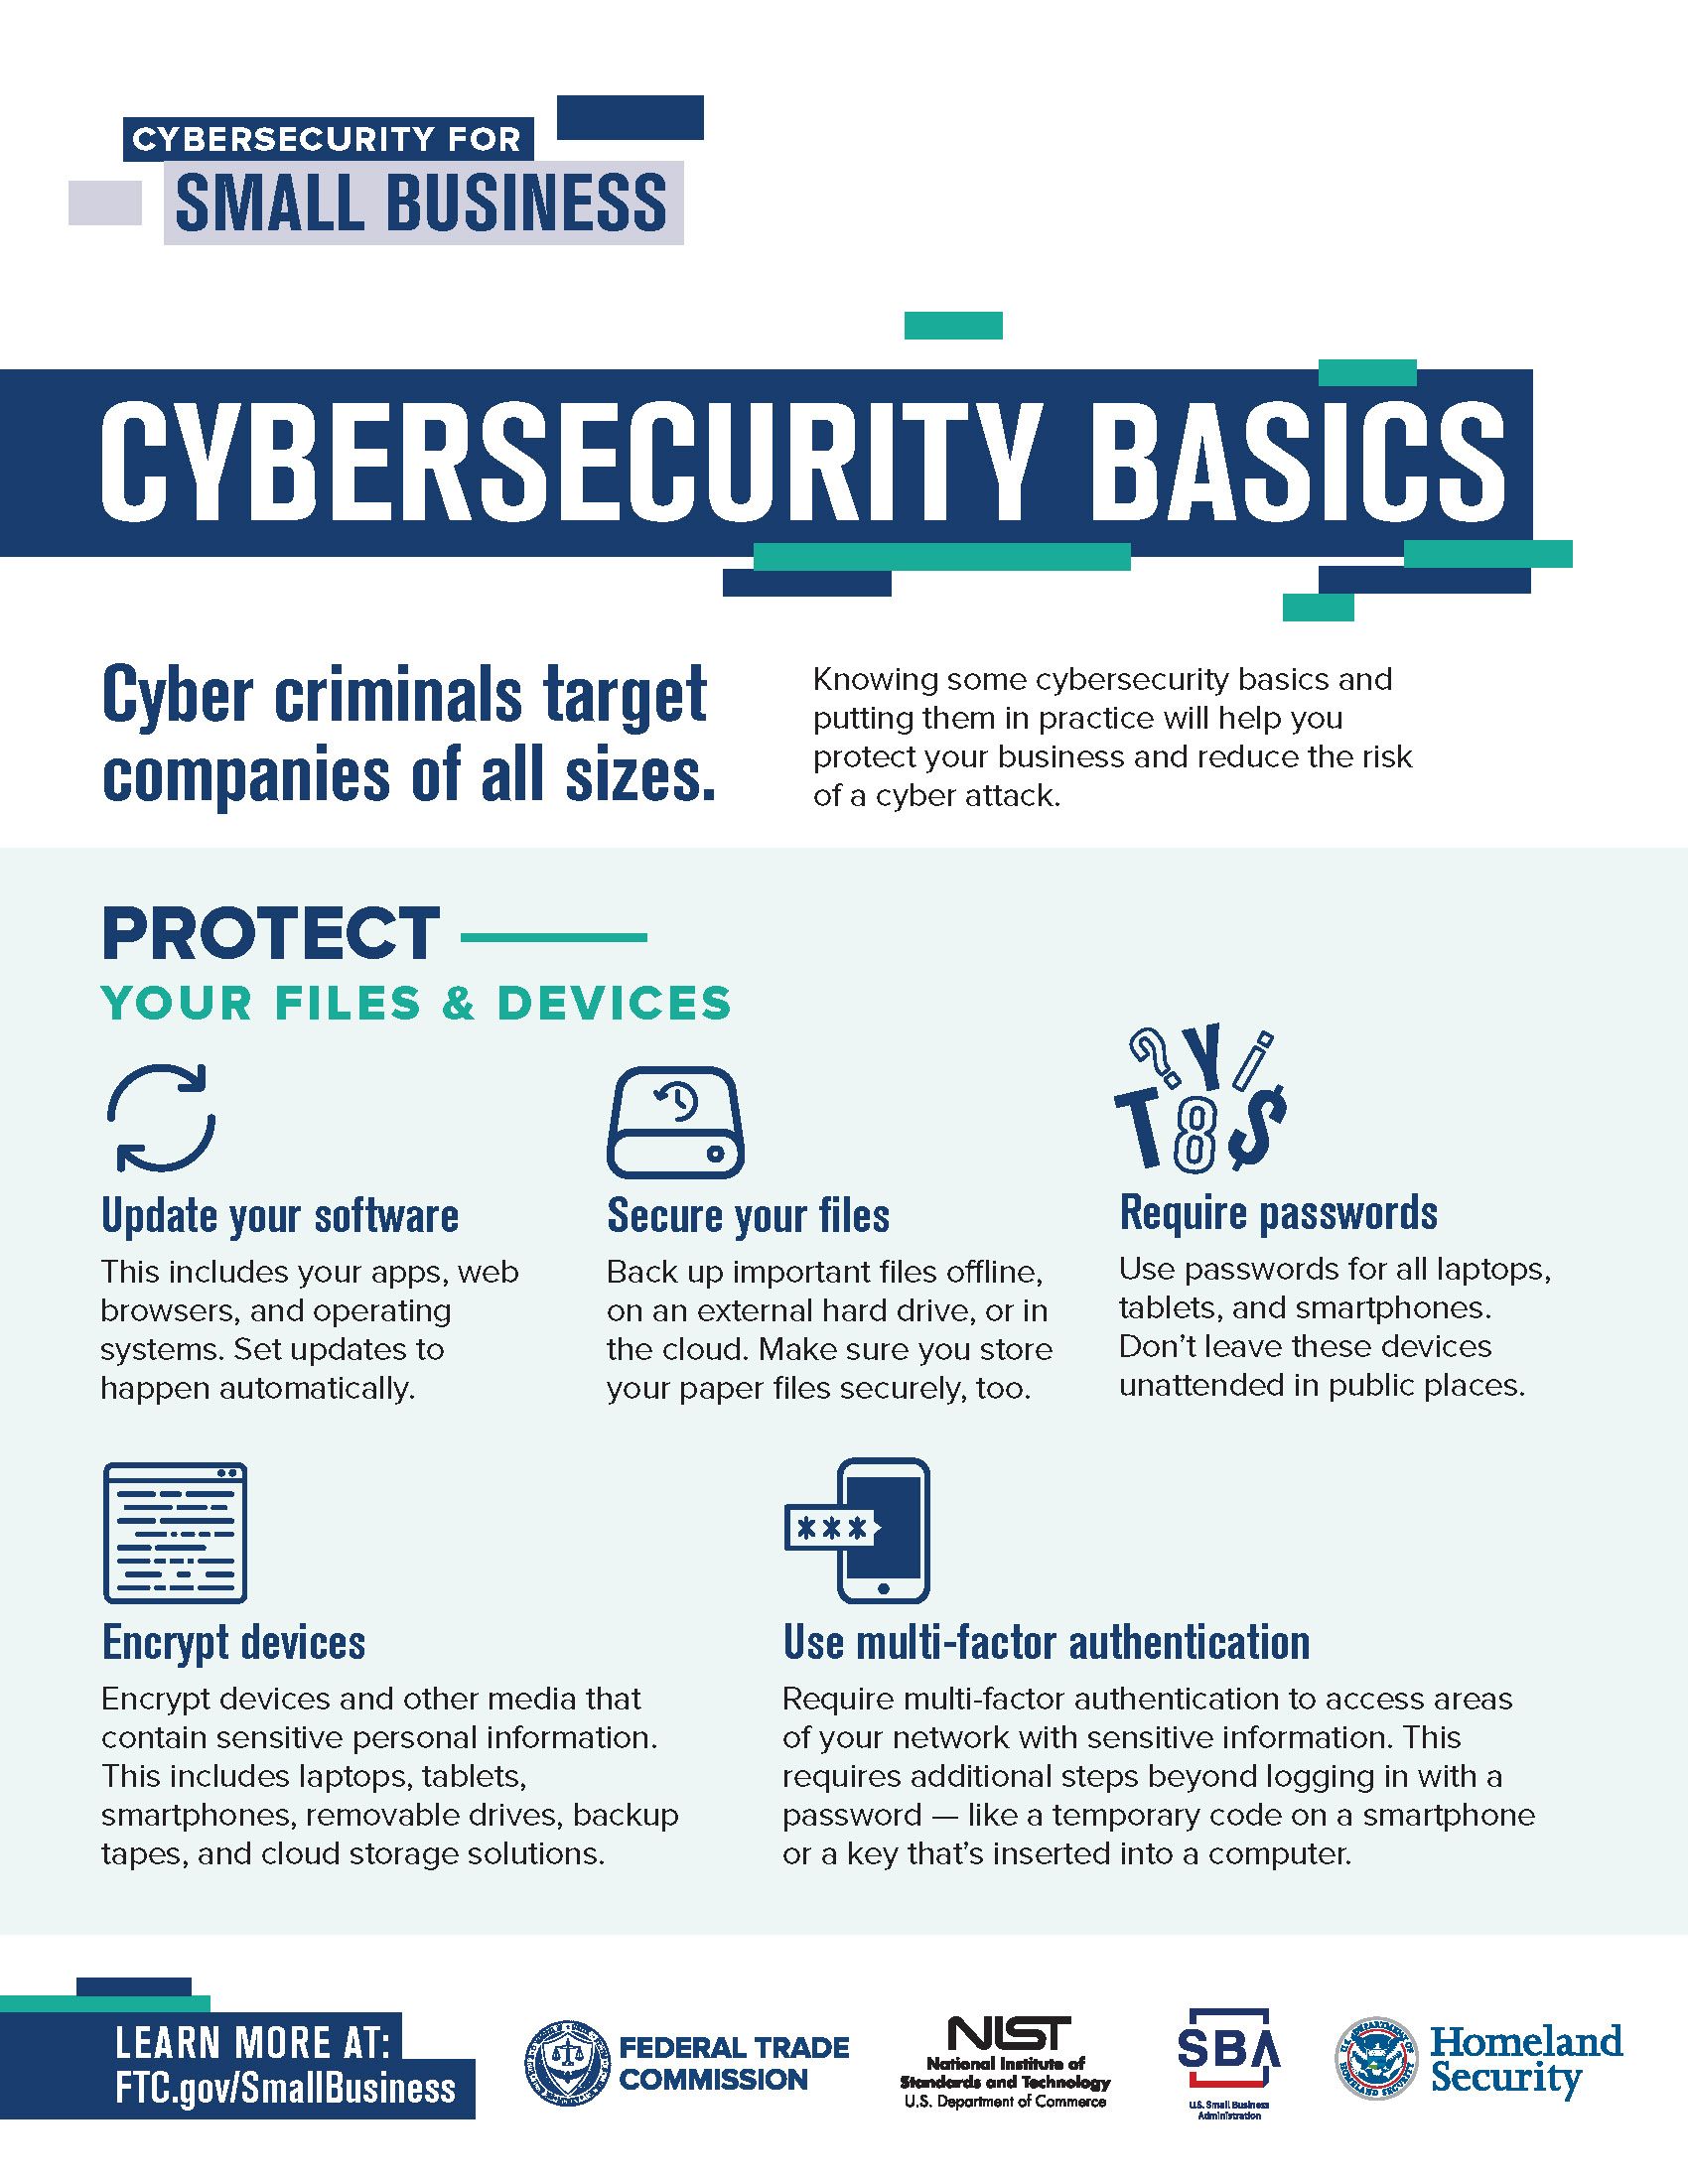 Cybersecurity basics